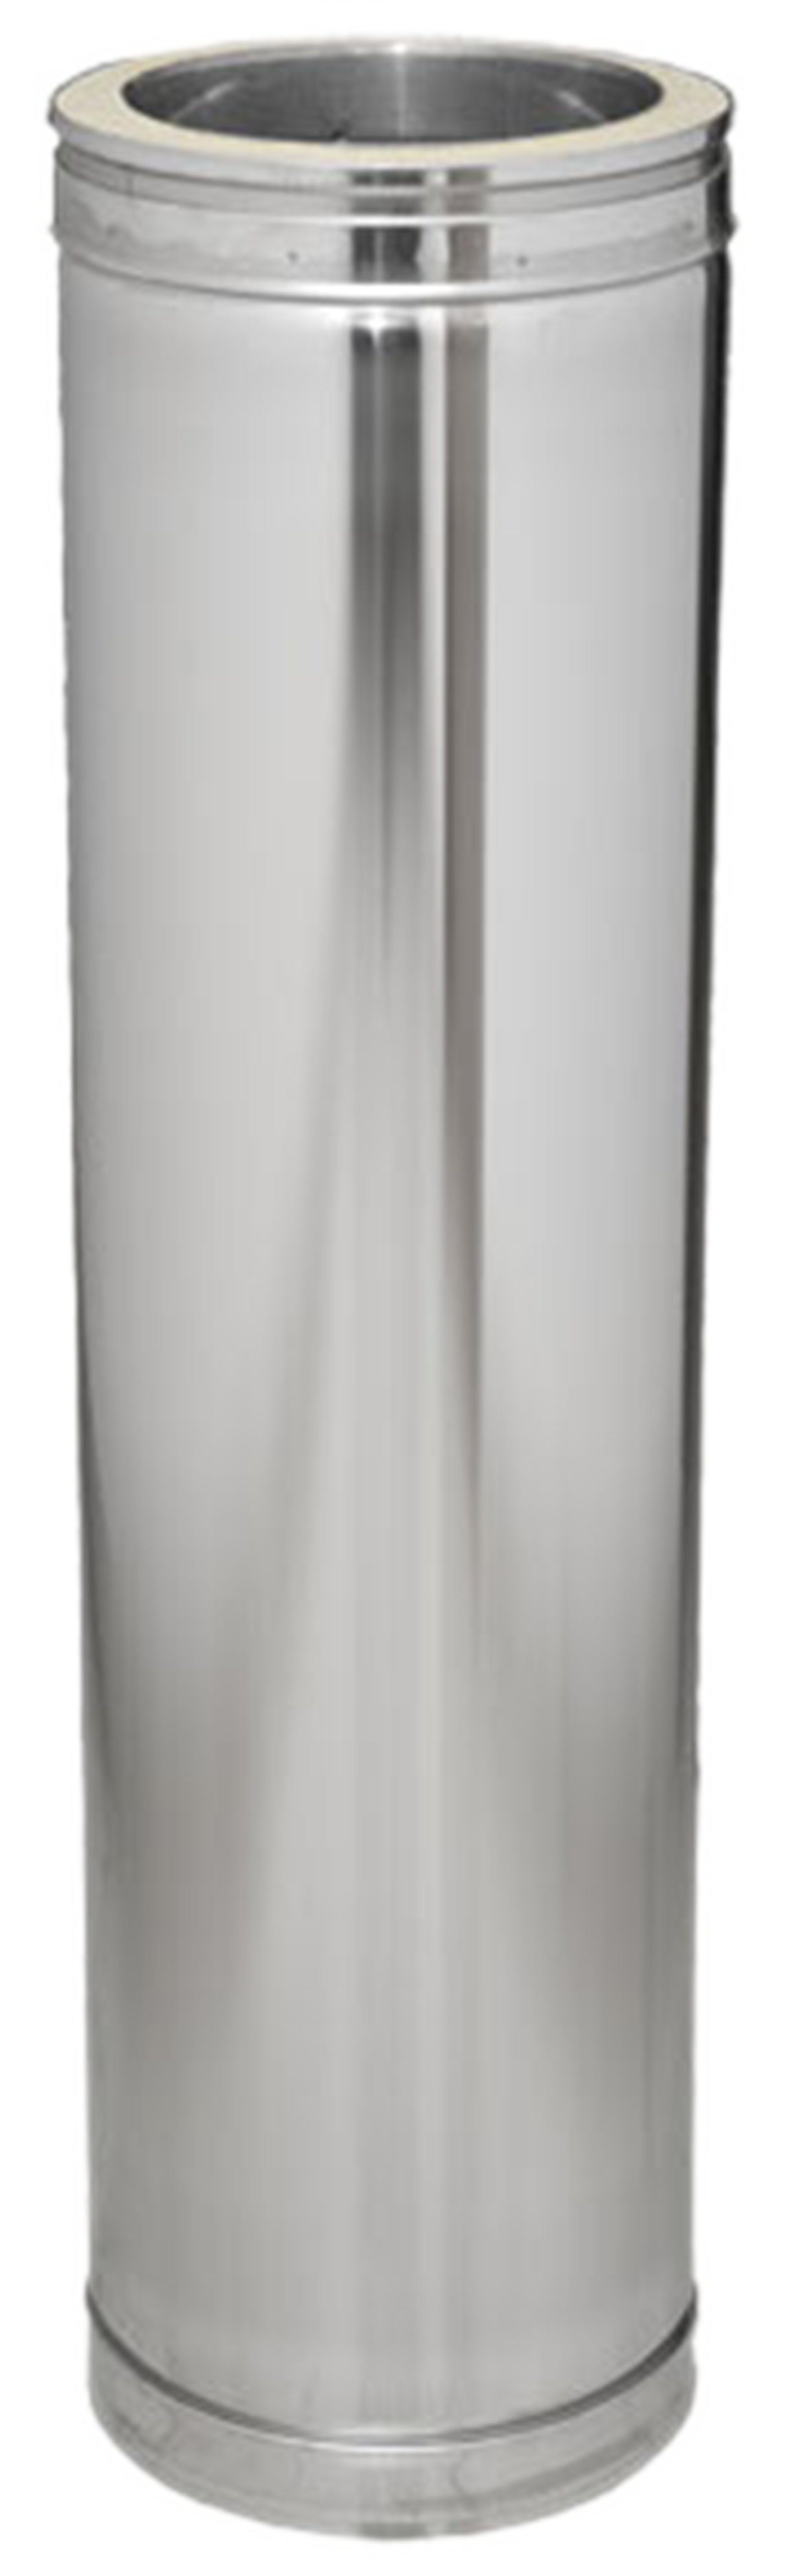 Tubo de acero inoxidable 150 mm de ø 0,98 cm